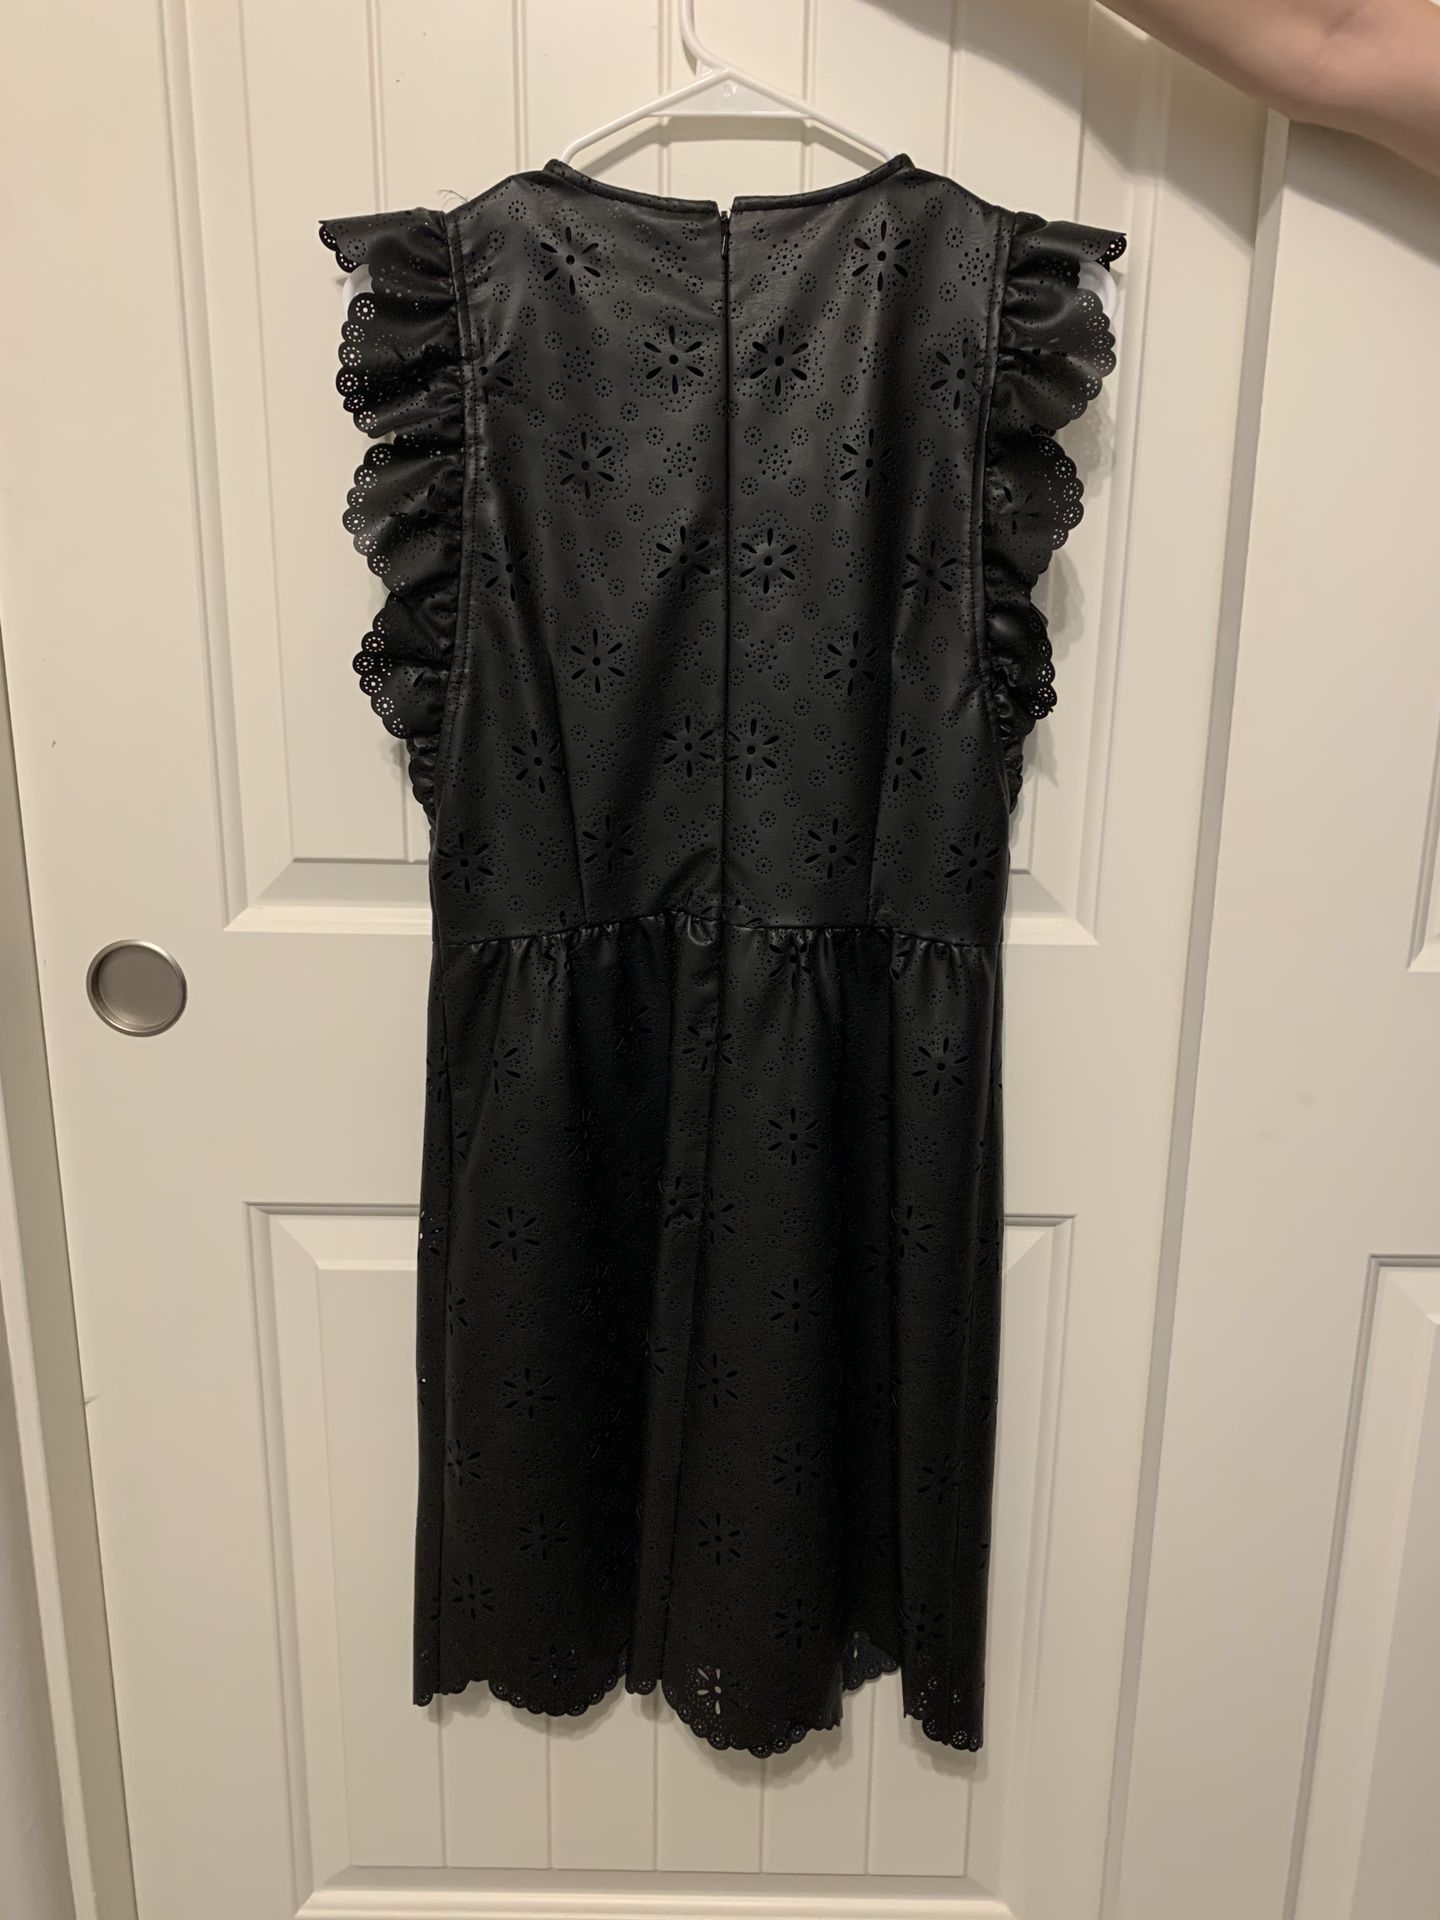 Michael Kors Black Dress - Size 4